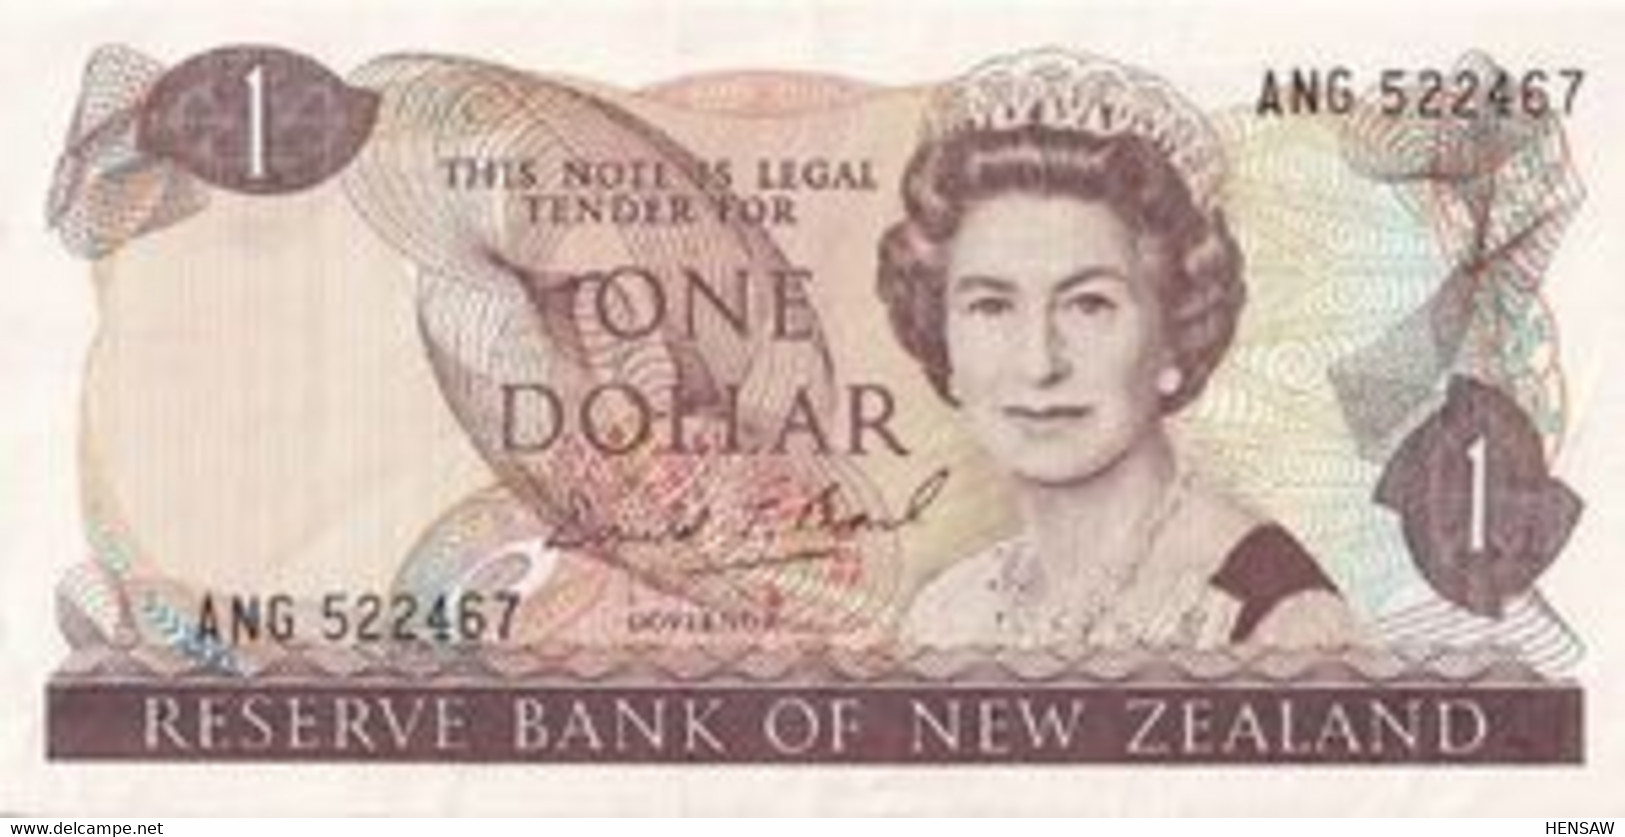 NEW ZEALAND 1 DOLLAR 1985 P 169b UNC SC NUEVO - New Zealand